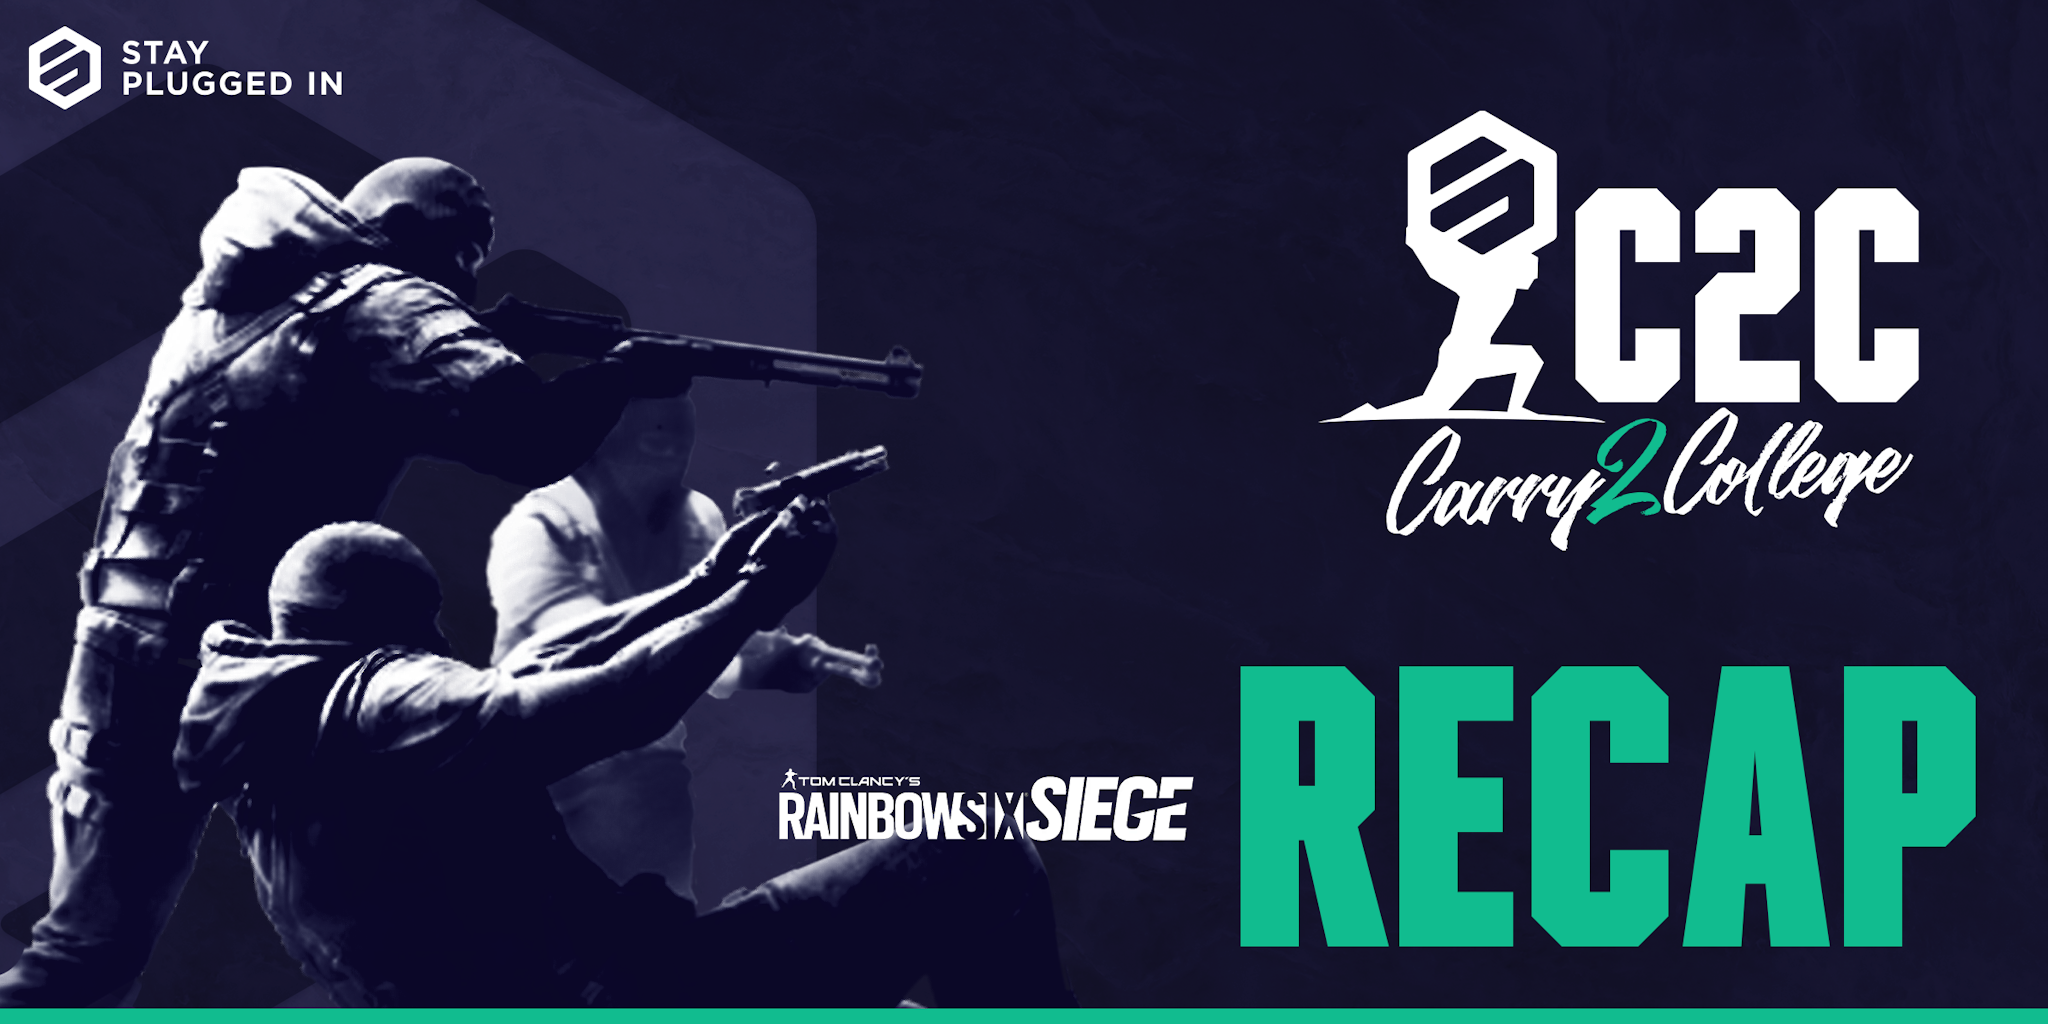 Carry 2 College Summer | Rainbow Six: Siege Recap